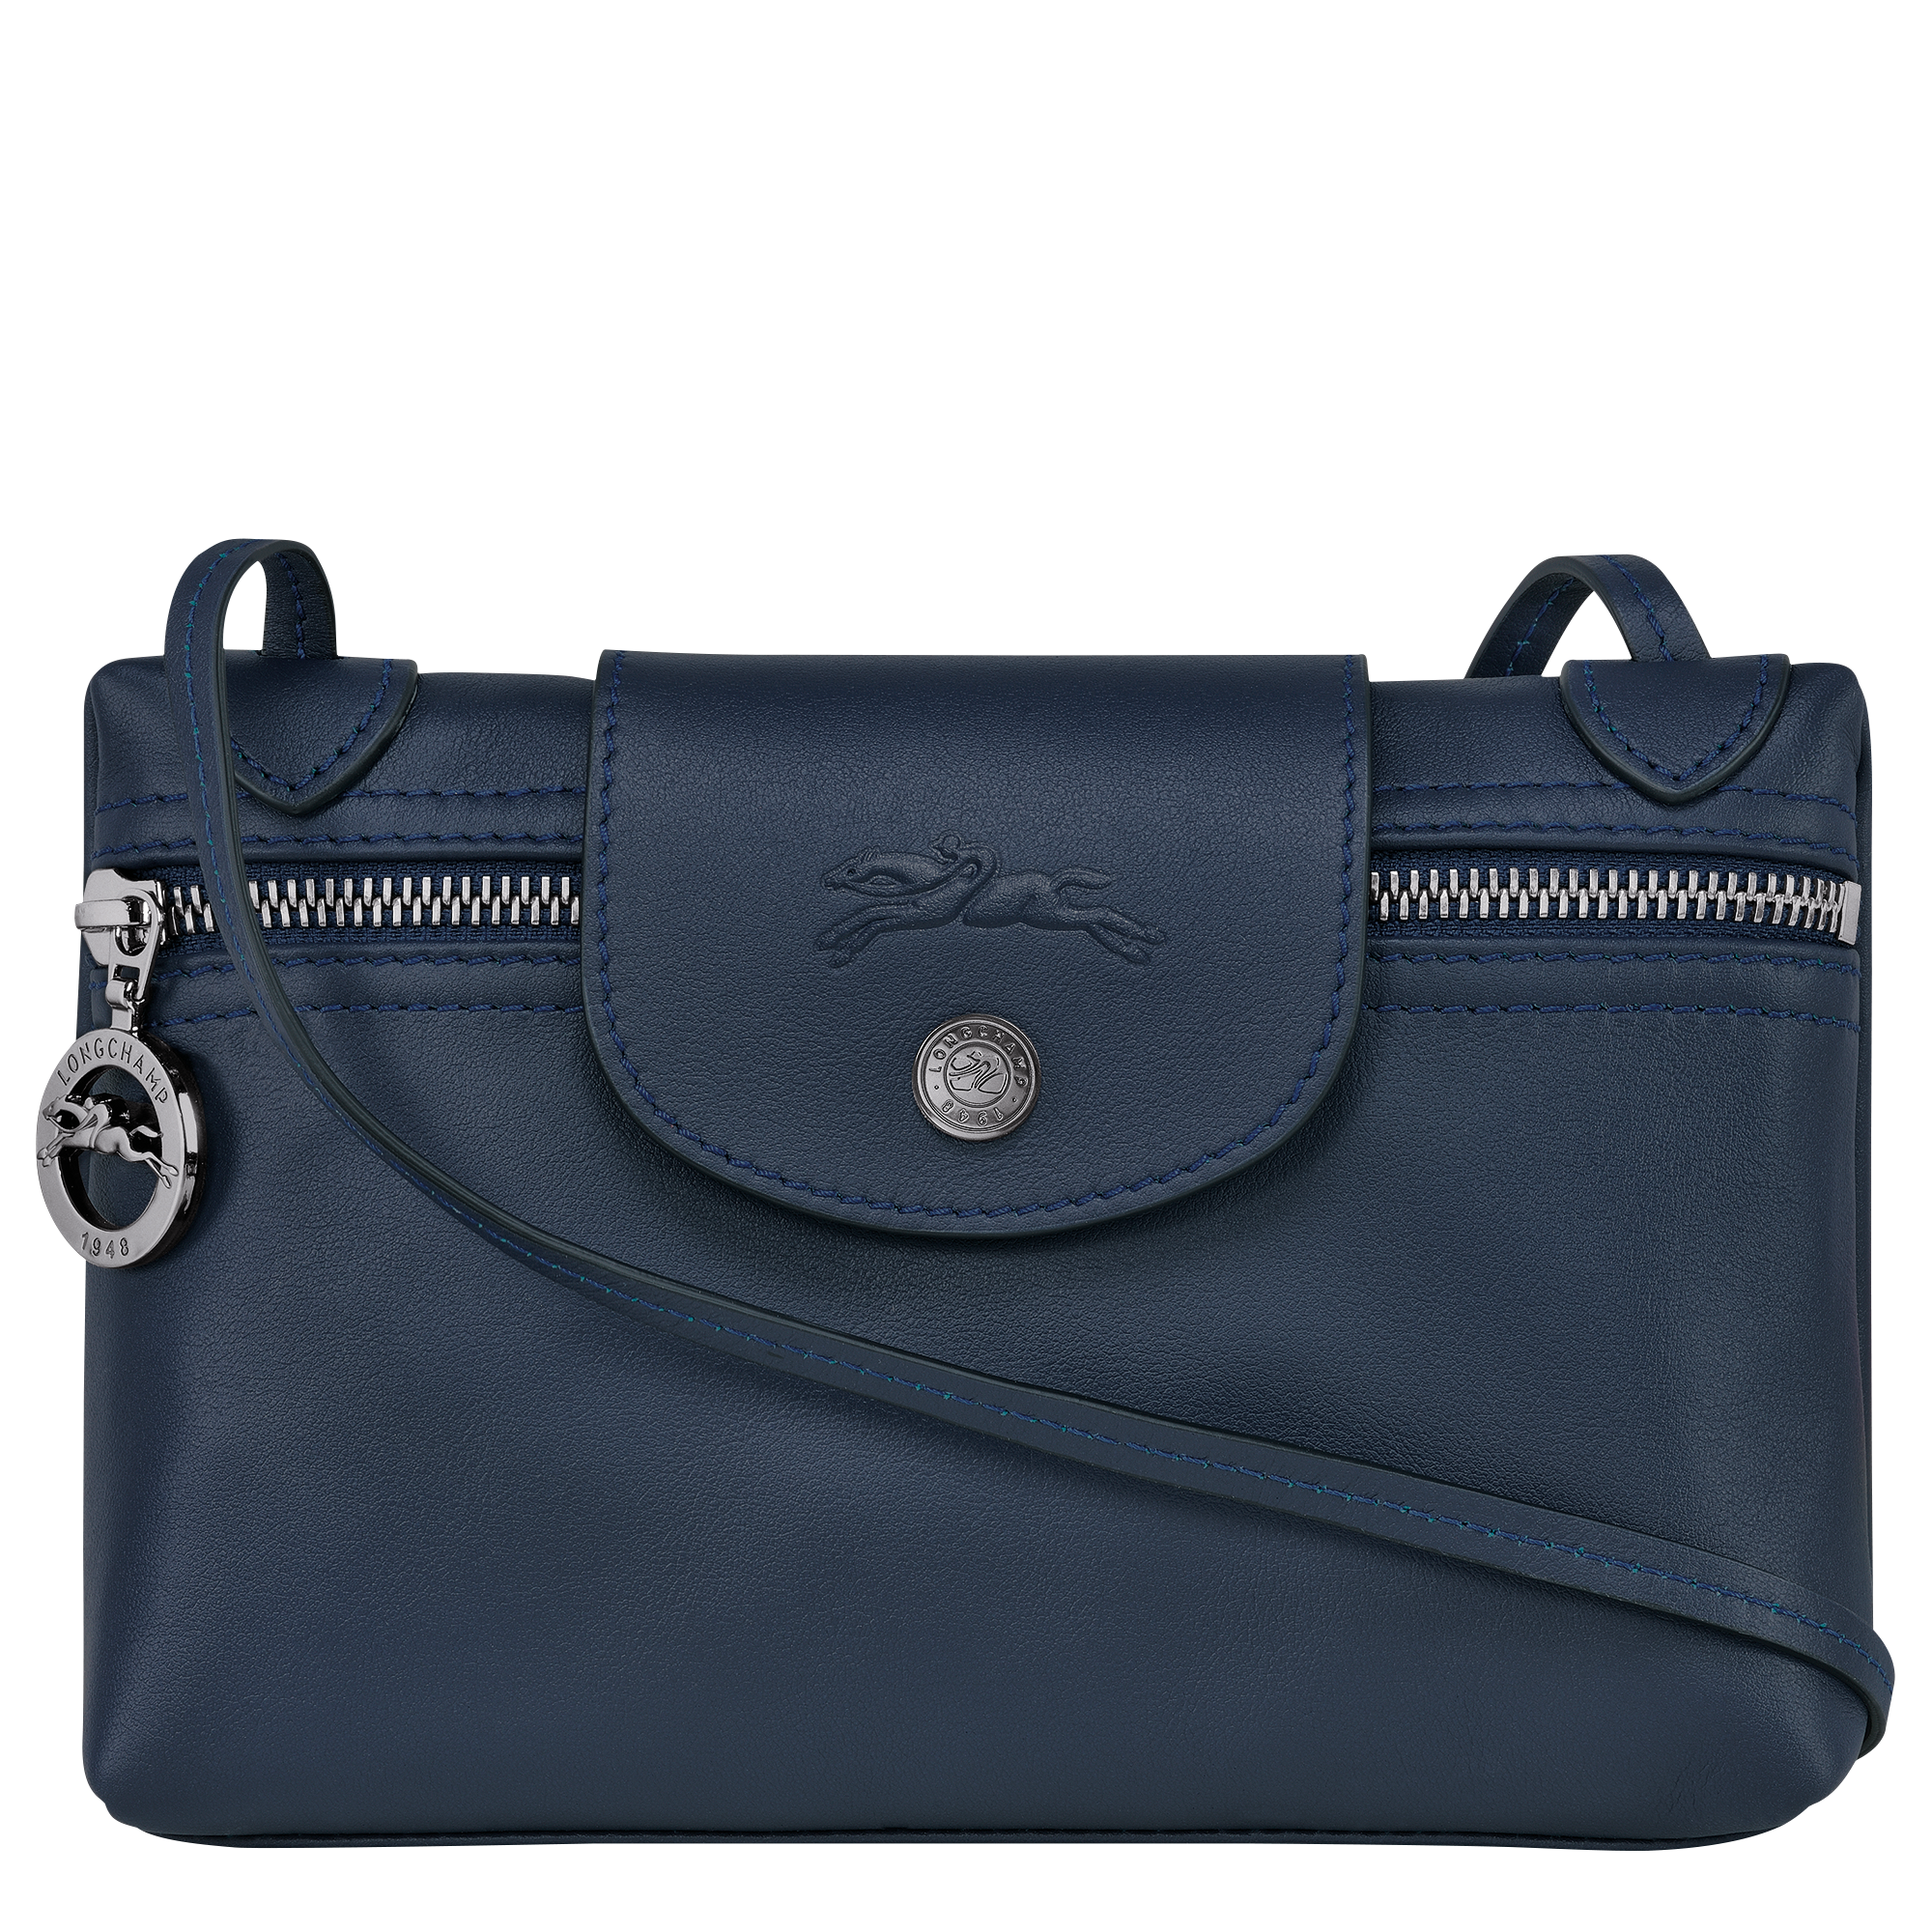 Le Pliage Xtra M Hobo bag Ecru - Leather (10189987037)